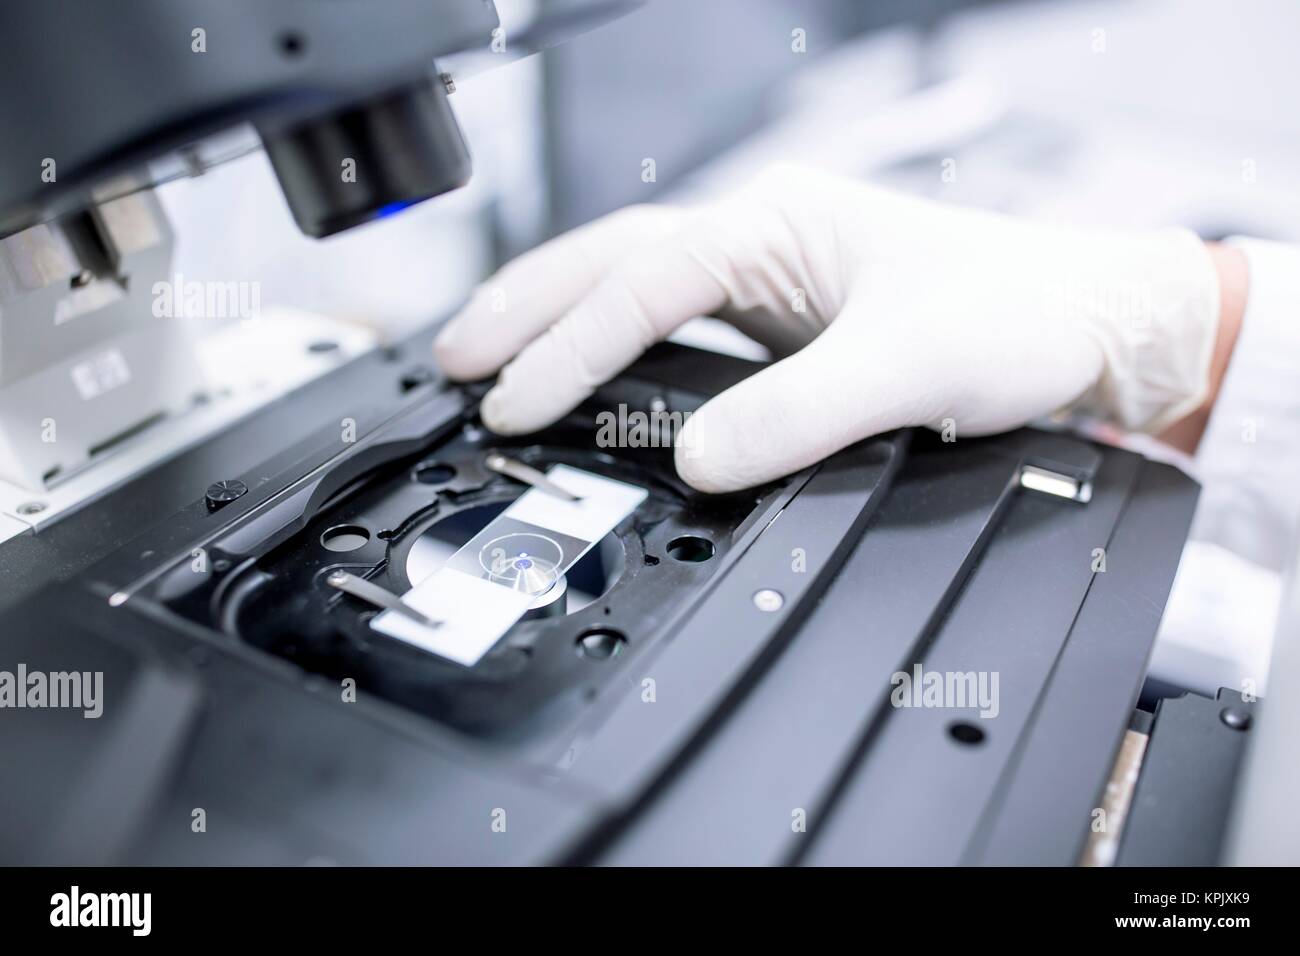 Scientist wearing latex glove adjusting microscope slide. Stock Photo